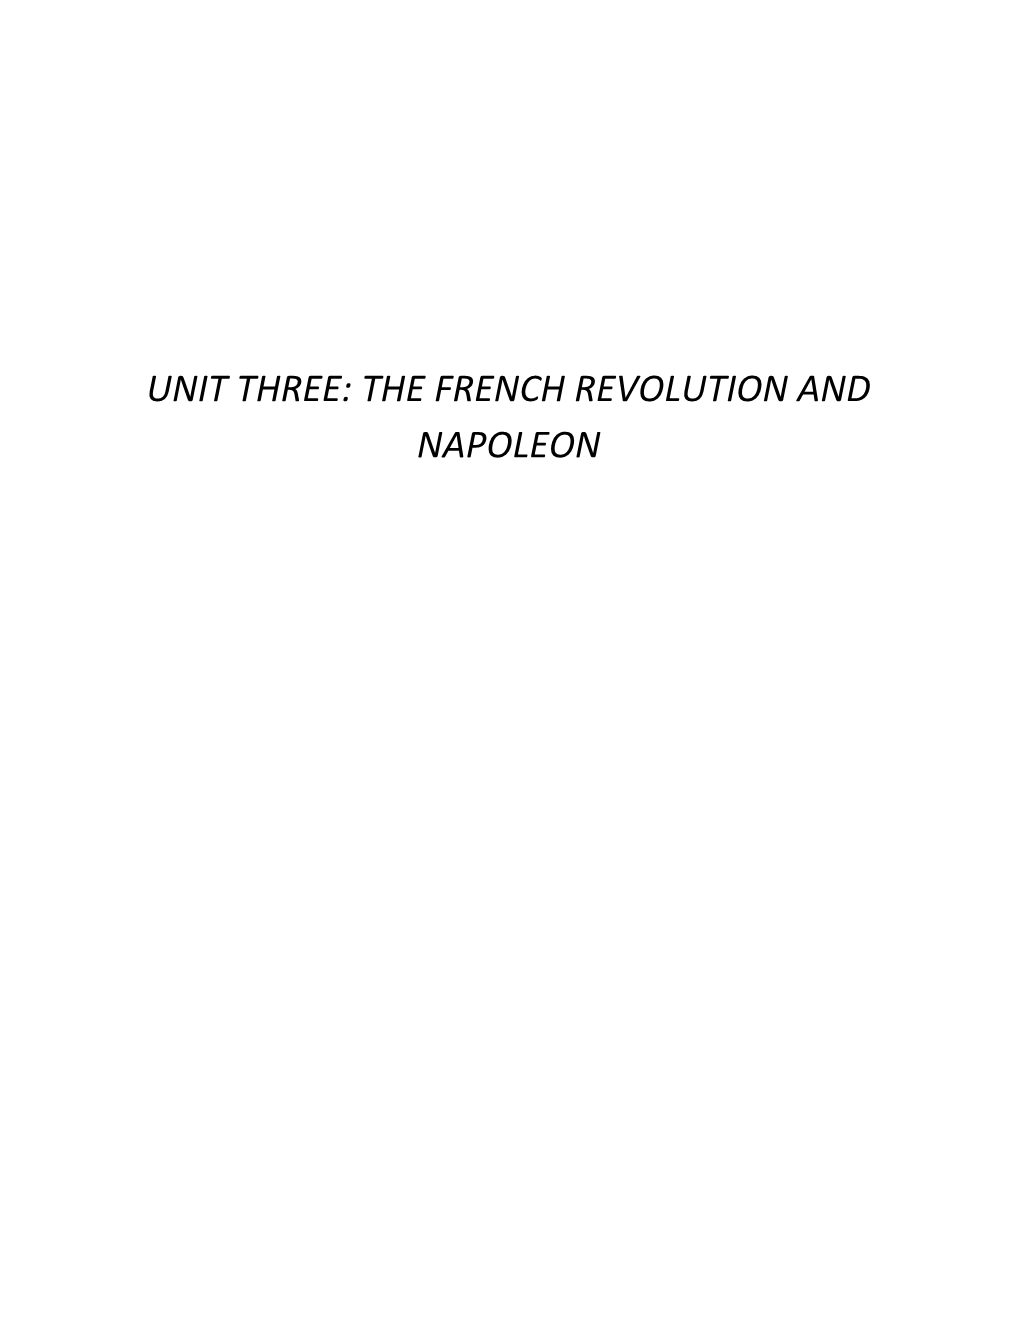 Unit Three: the French Revolution and Napoleon